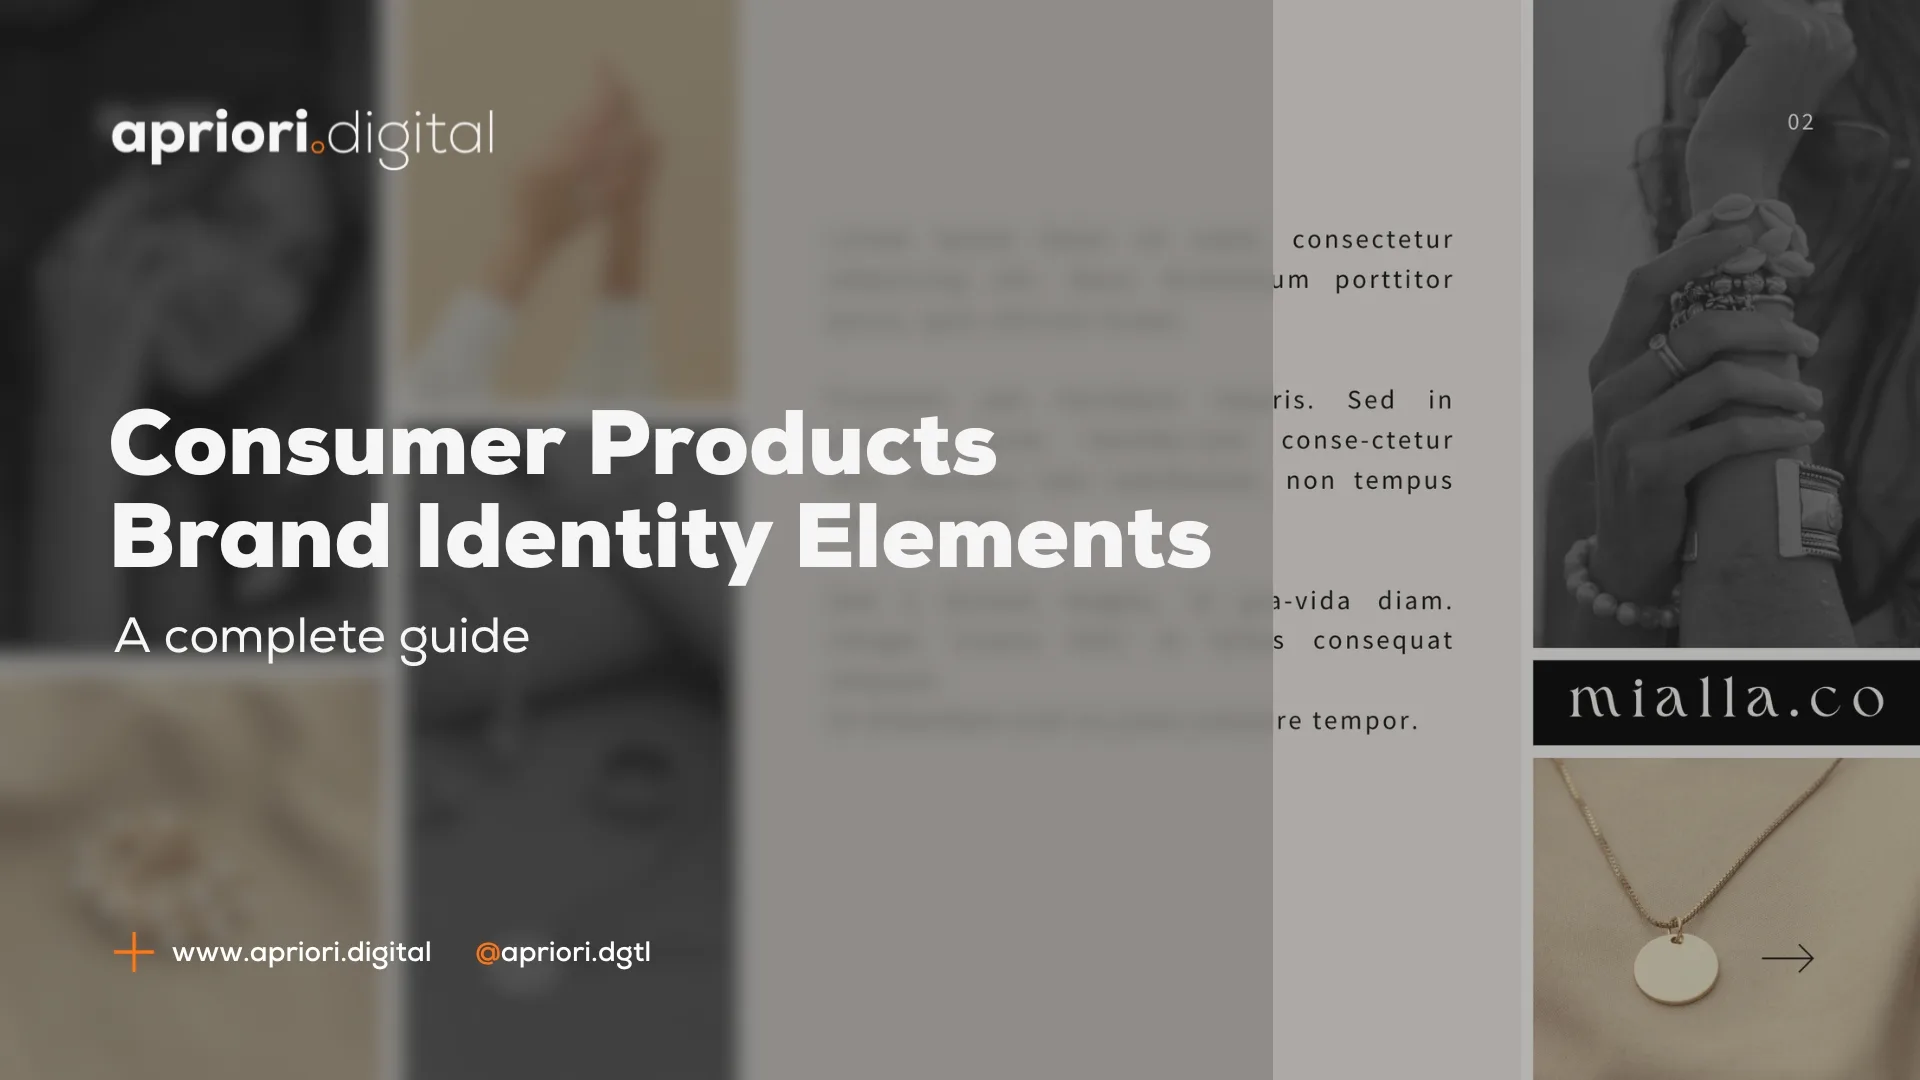 Consumer Products Brand Identity Elements | Apriori Digital